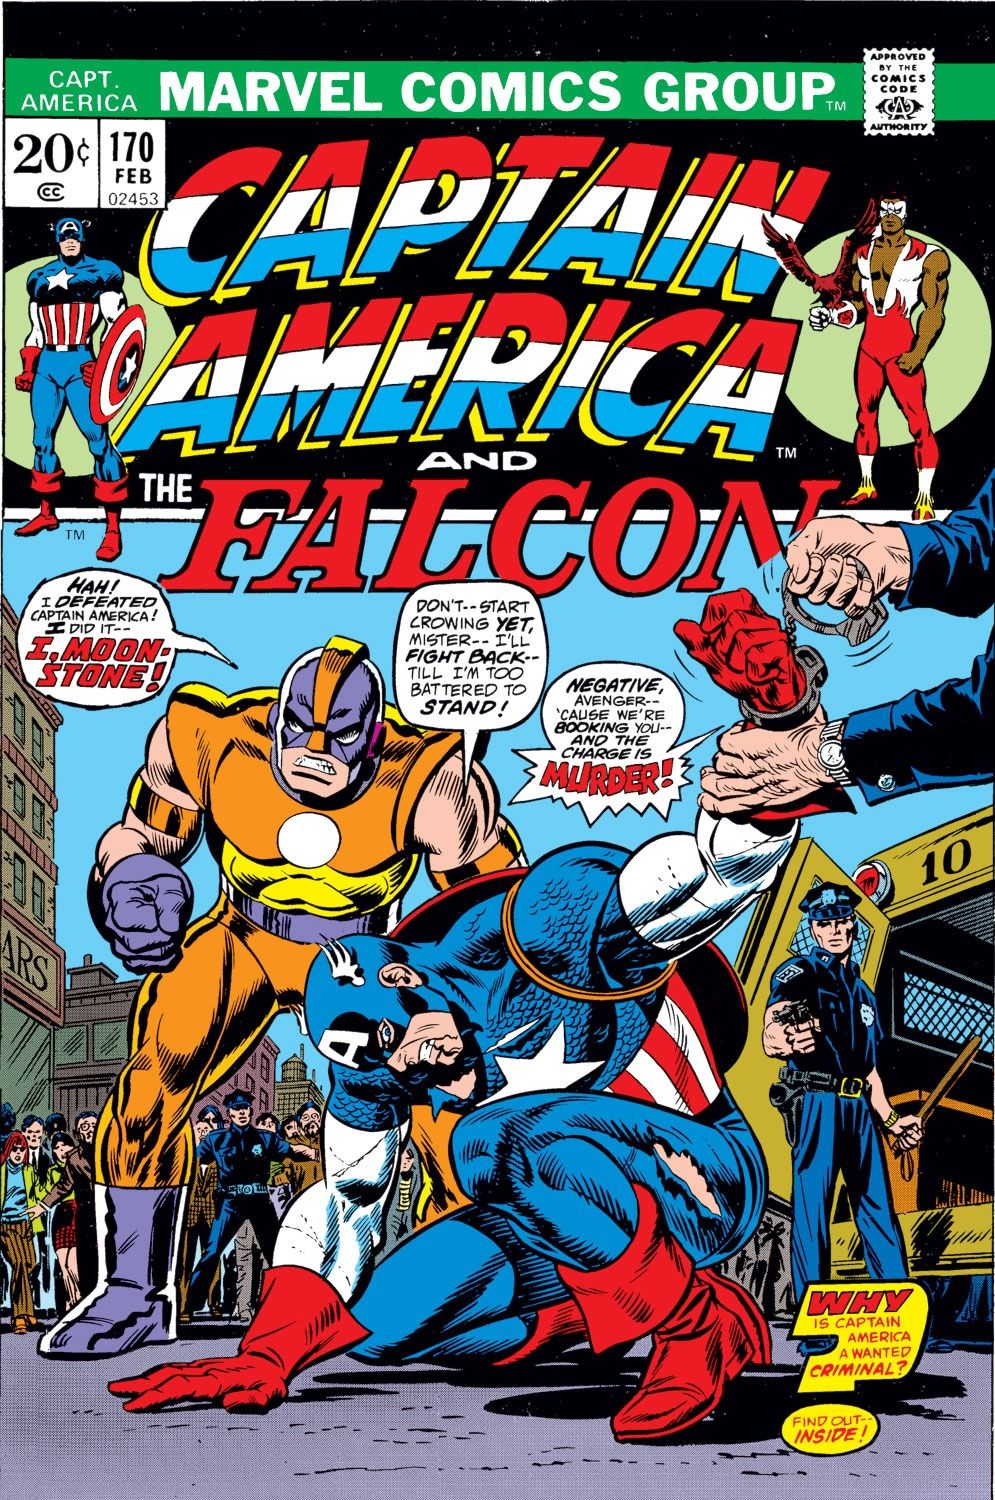 50 Years Ago, Captain America Went For Nixon's Jugular